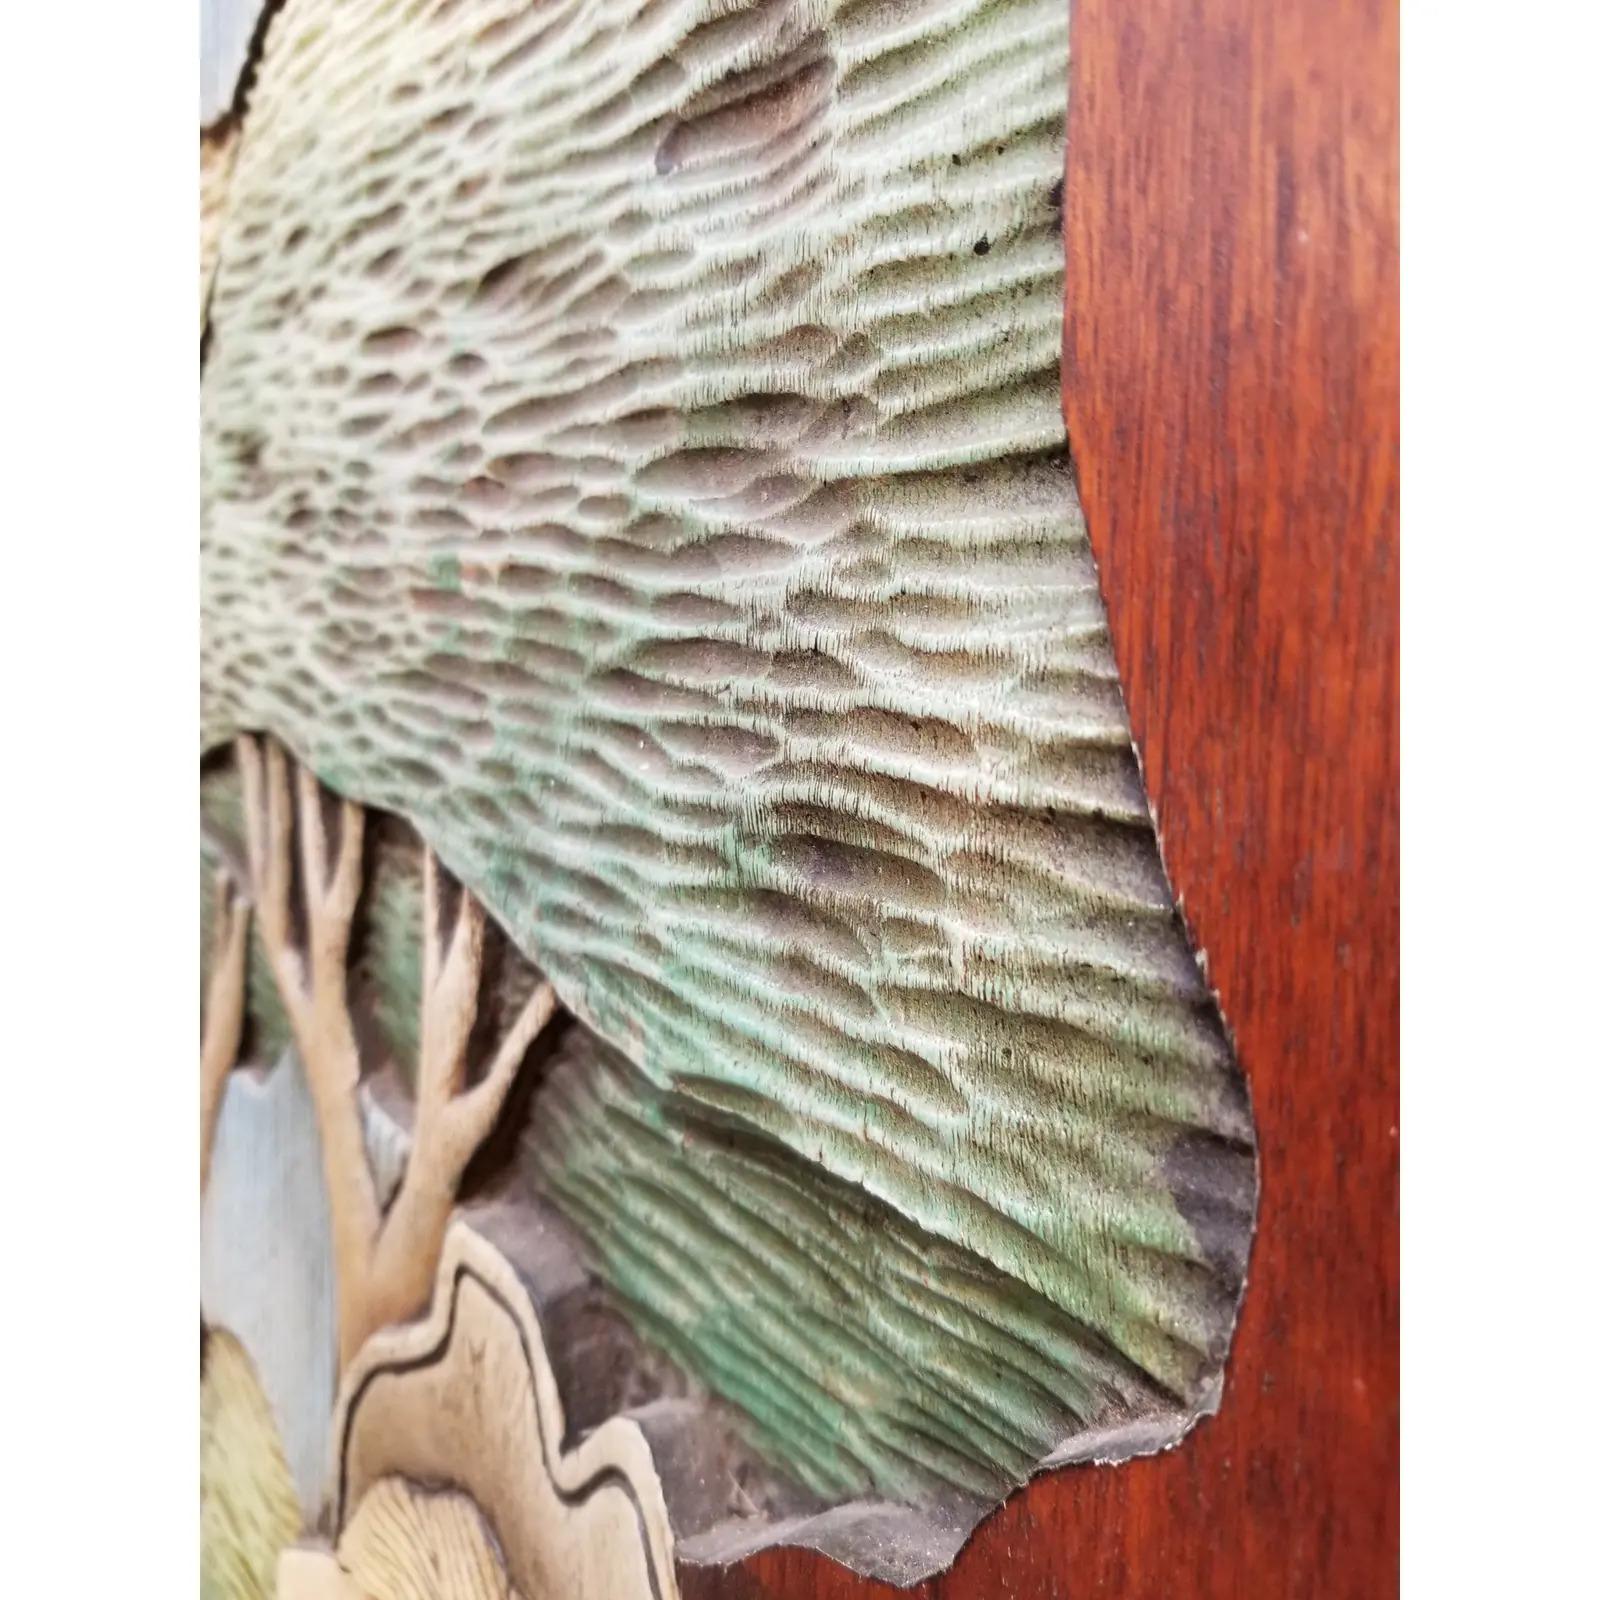 Brazilian Polychrome Hand Carved Honduras Mahogany Panel / Door 1